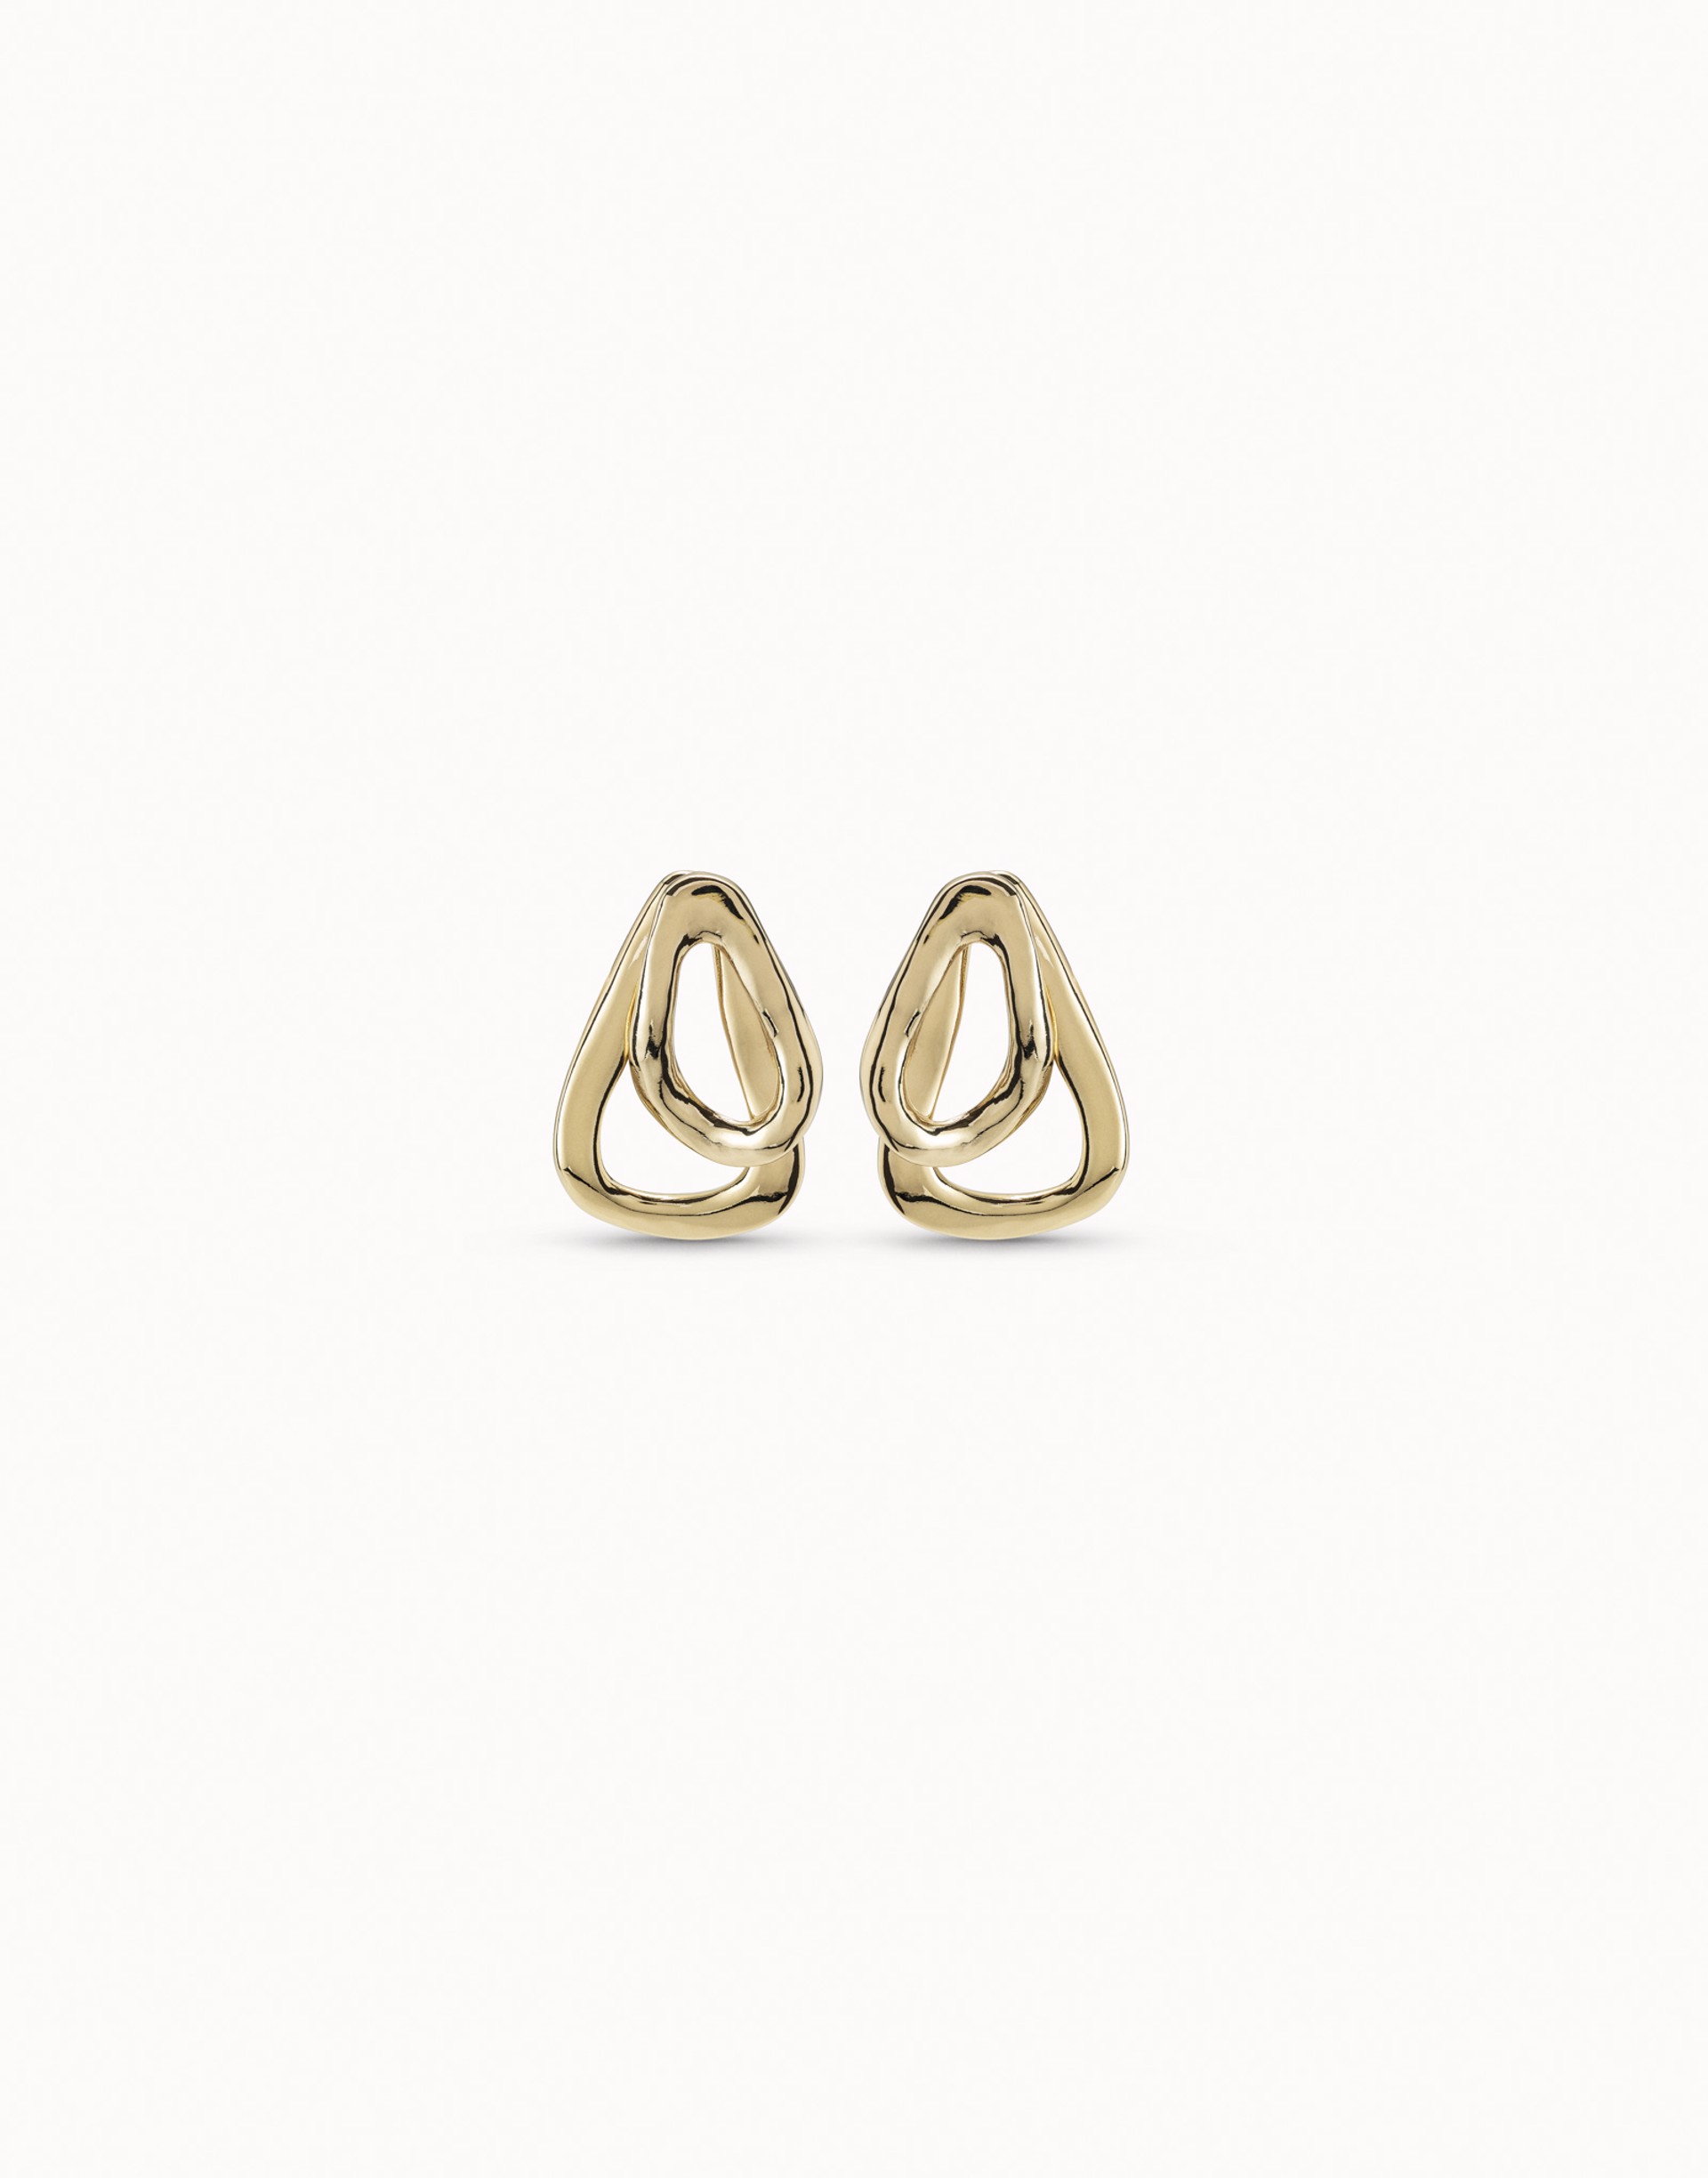 7343 Connected Earrings by UNO DE 50